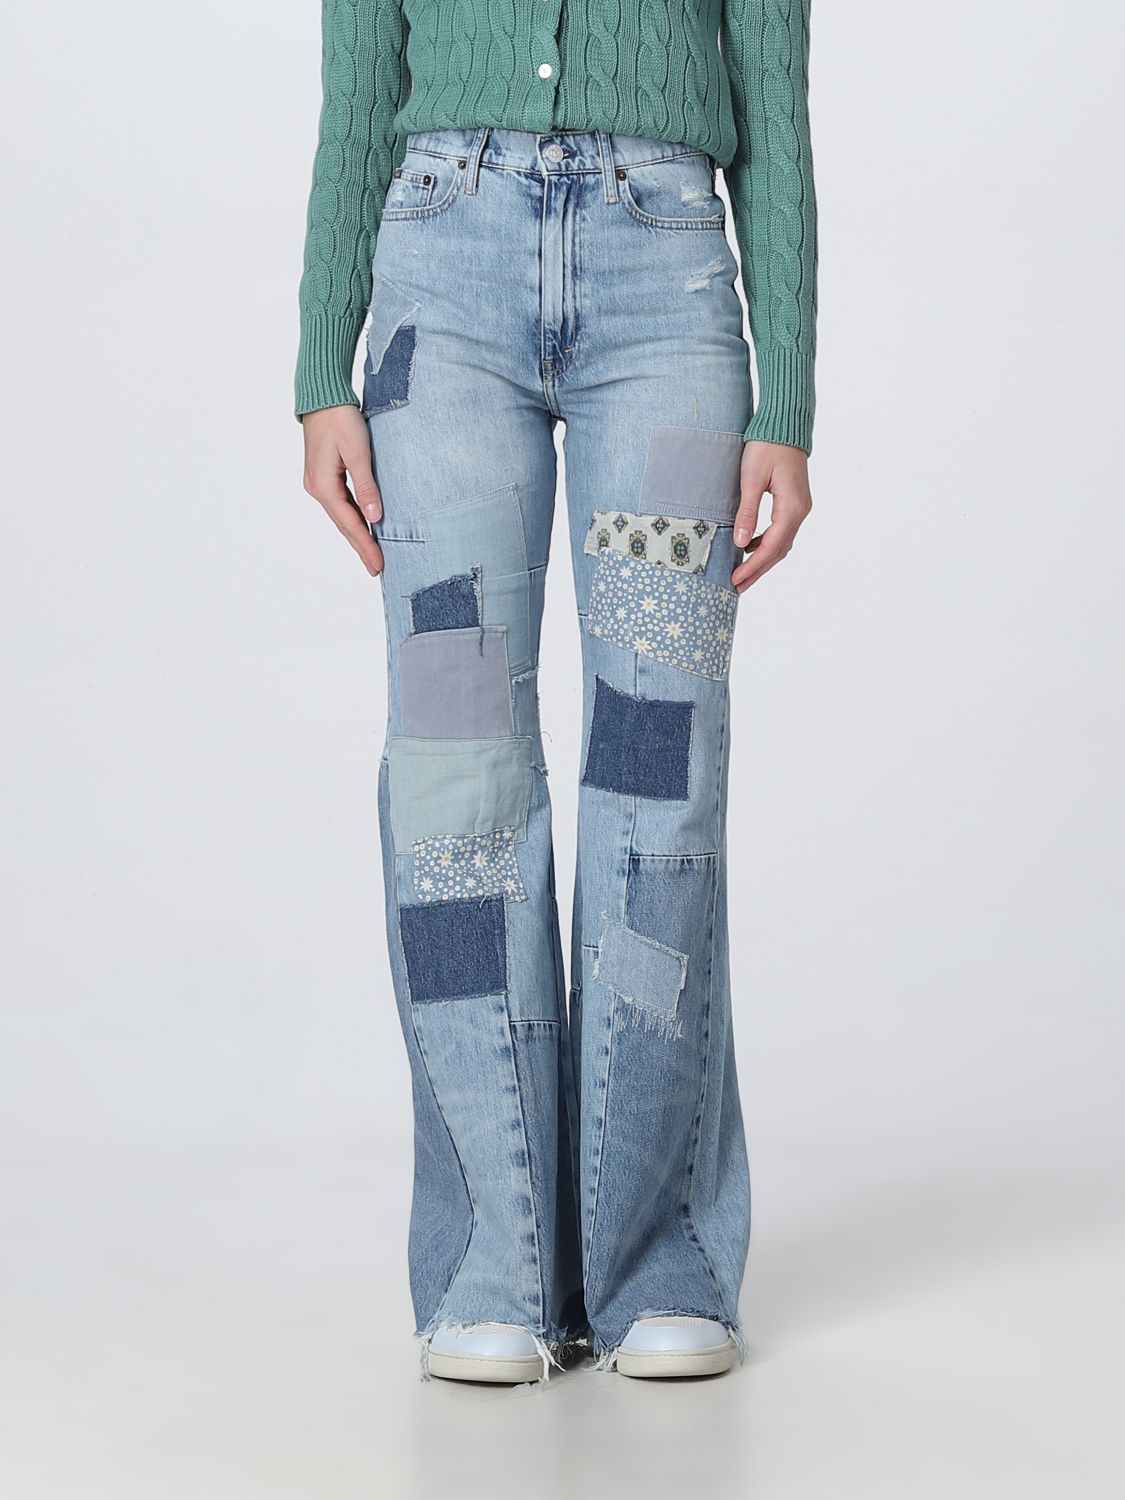 POLO RALPH LAUREN: jeans for woman - Denim | Polo Ralph Lauren jeans ...